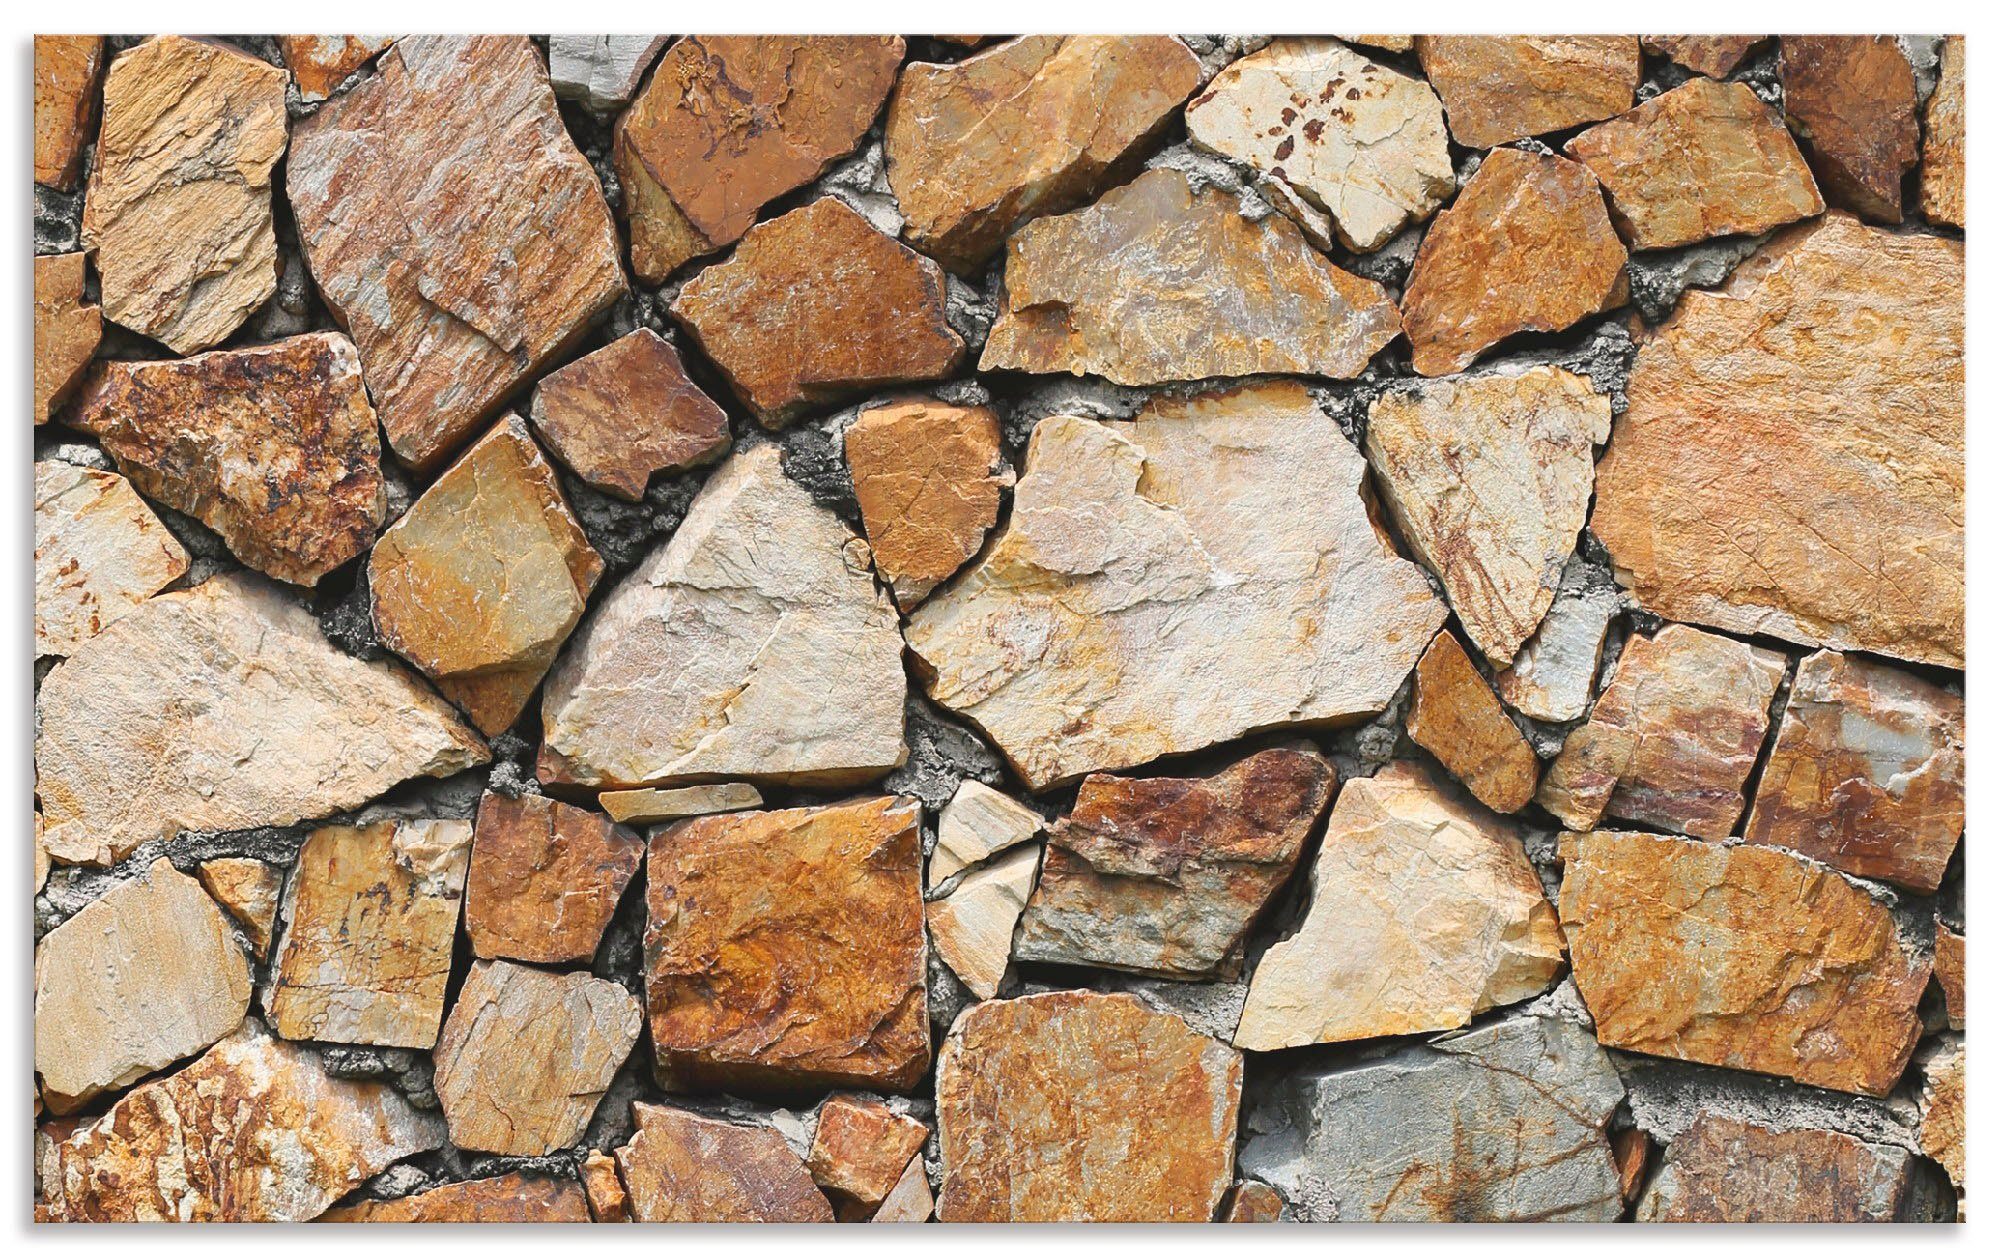 Artland Keukenwand Bruine stenen muur zelfklevend in vele maten - spatscherm keuken achter kookplaat en spoelbak als wandbescherming tegen vet, water en vuil - achterwand, wandbekl